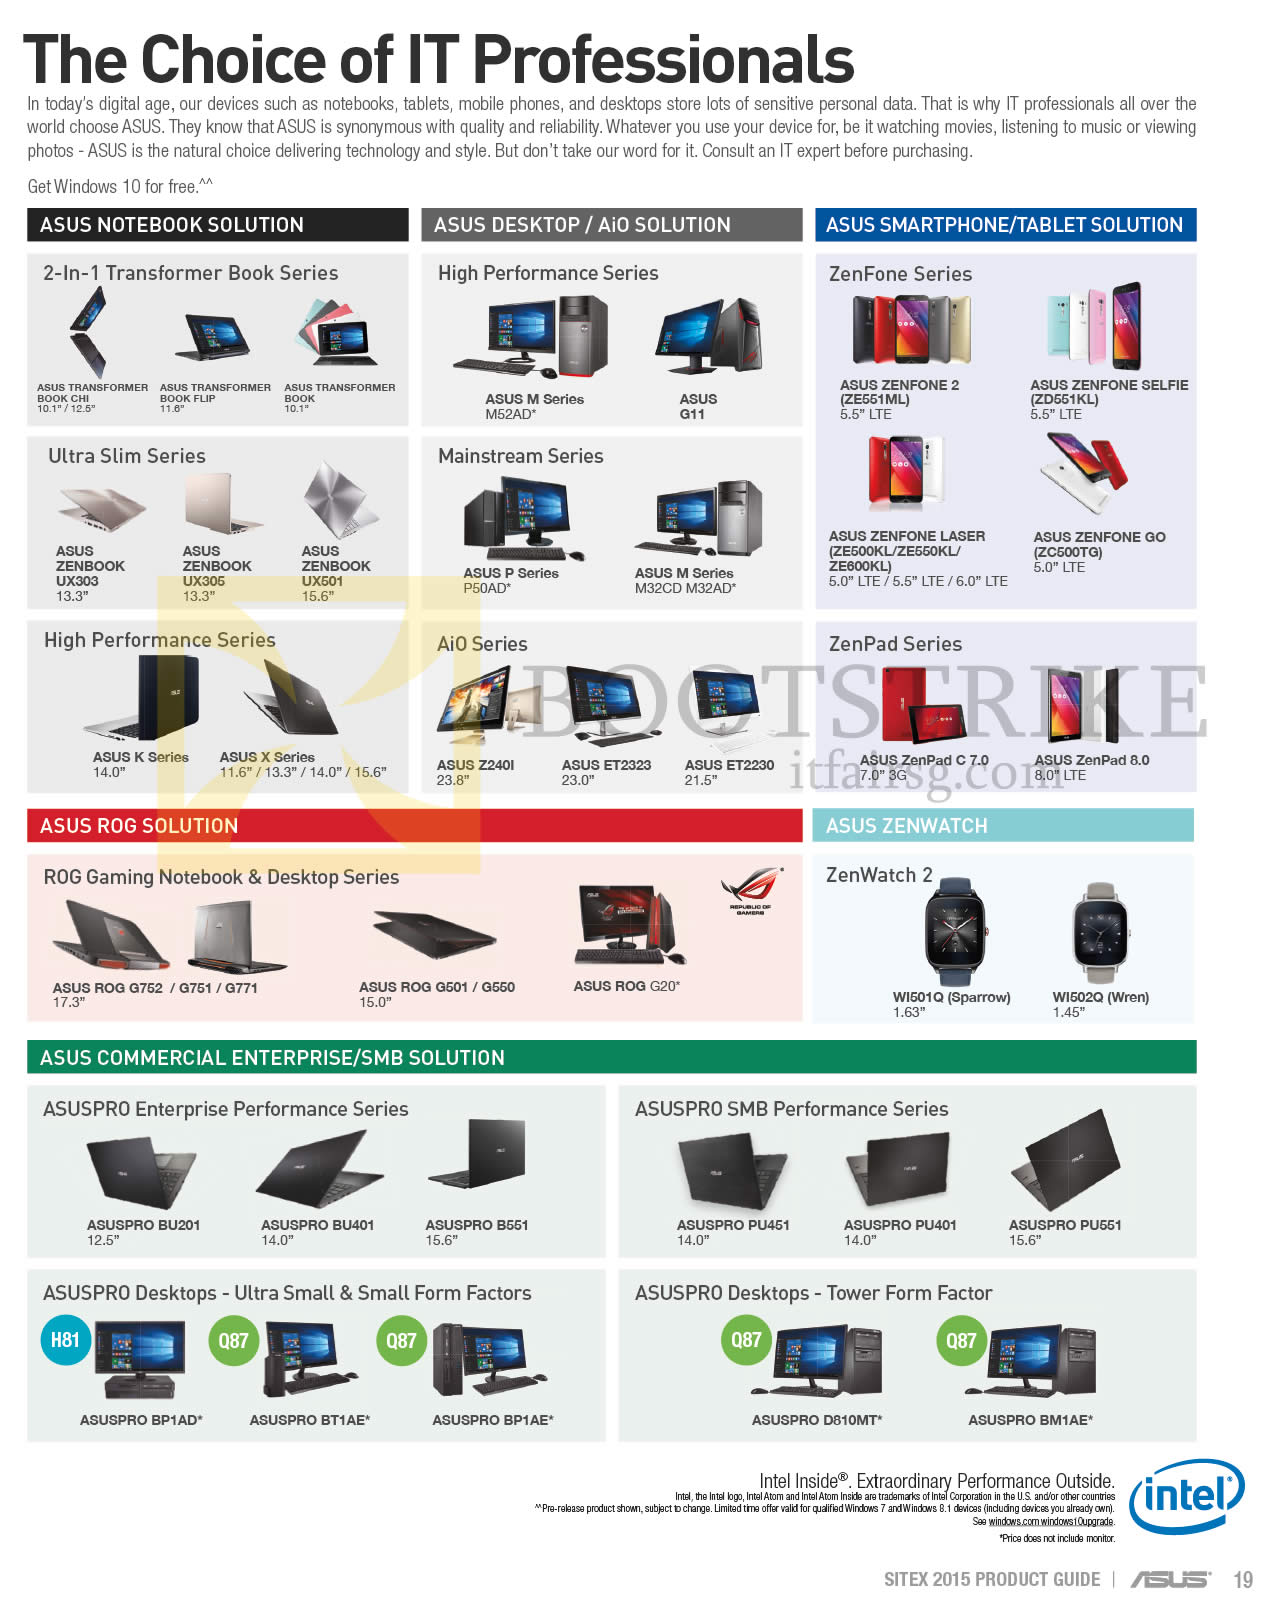 SITEX 2015 price list image brochure of ASUS Solutions Notebooks, Desktop PCs, Tablet, Smartphone, ROG, Commercial Enterprise